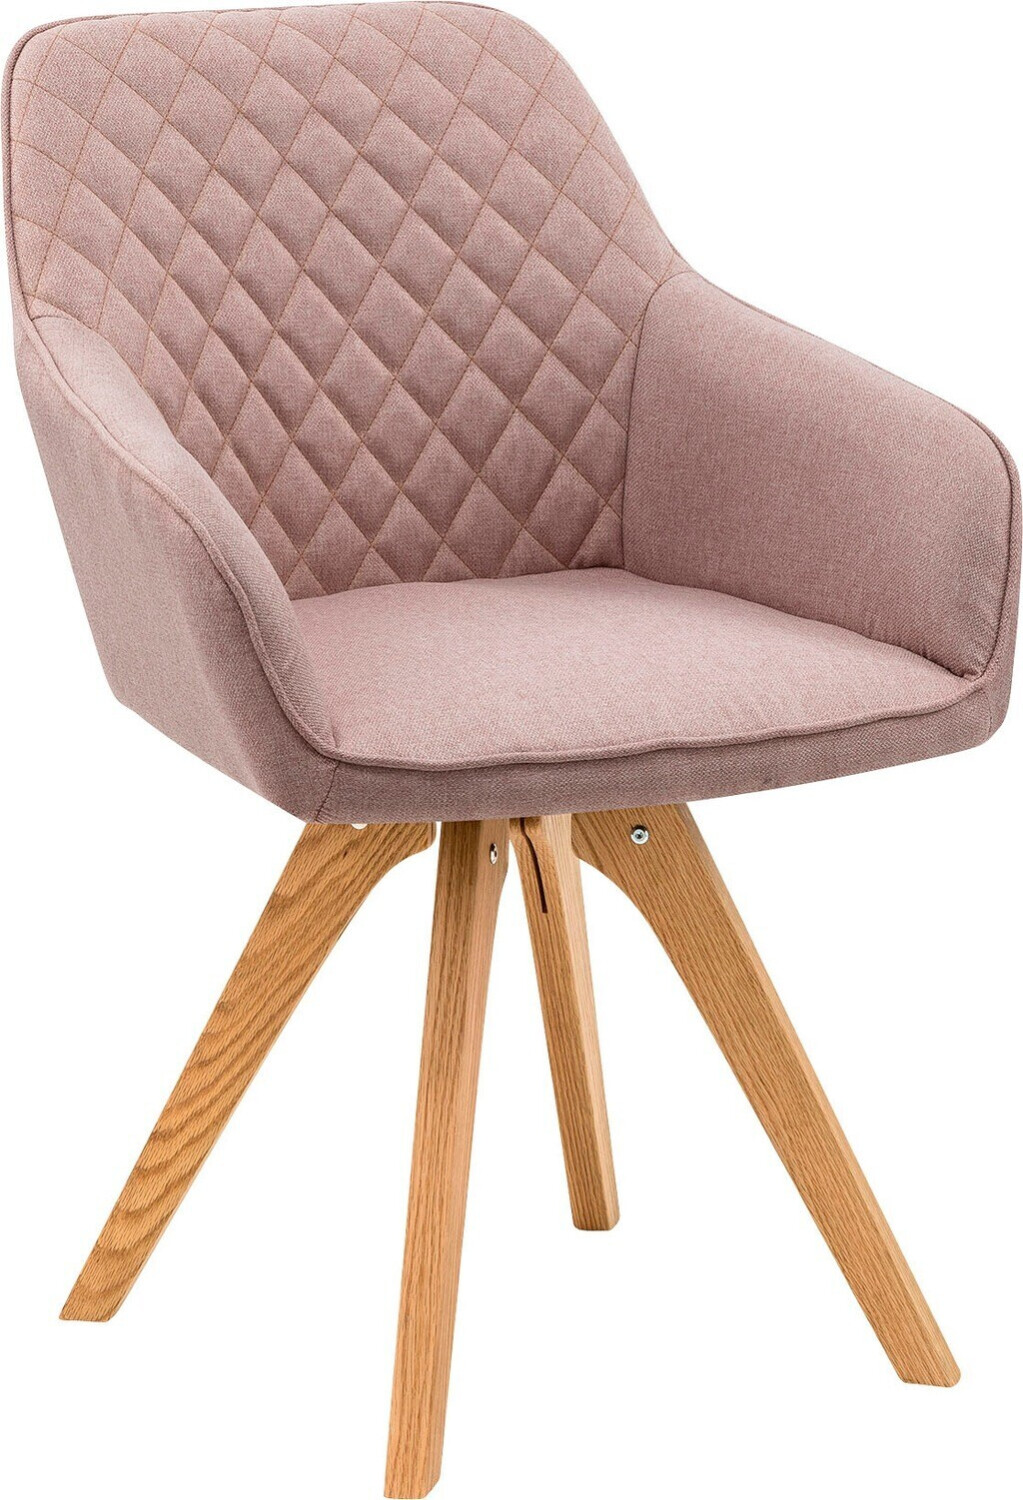 SalesFever Sitzgruppe 5tlg. 180x90 cm grau + Eiche 4x Stuhl rosa + Beine  Eiche (393246) ab 1.149,00 € | Preisvergleich bei